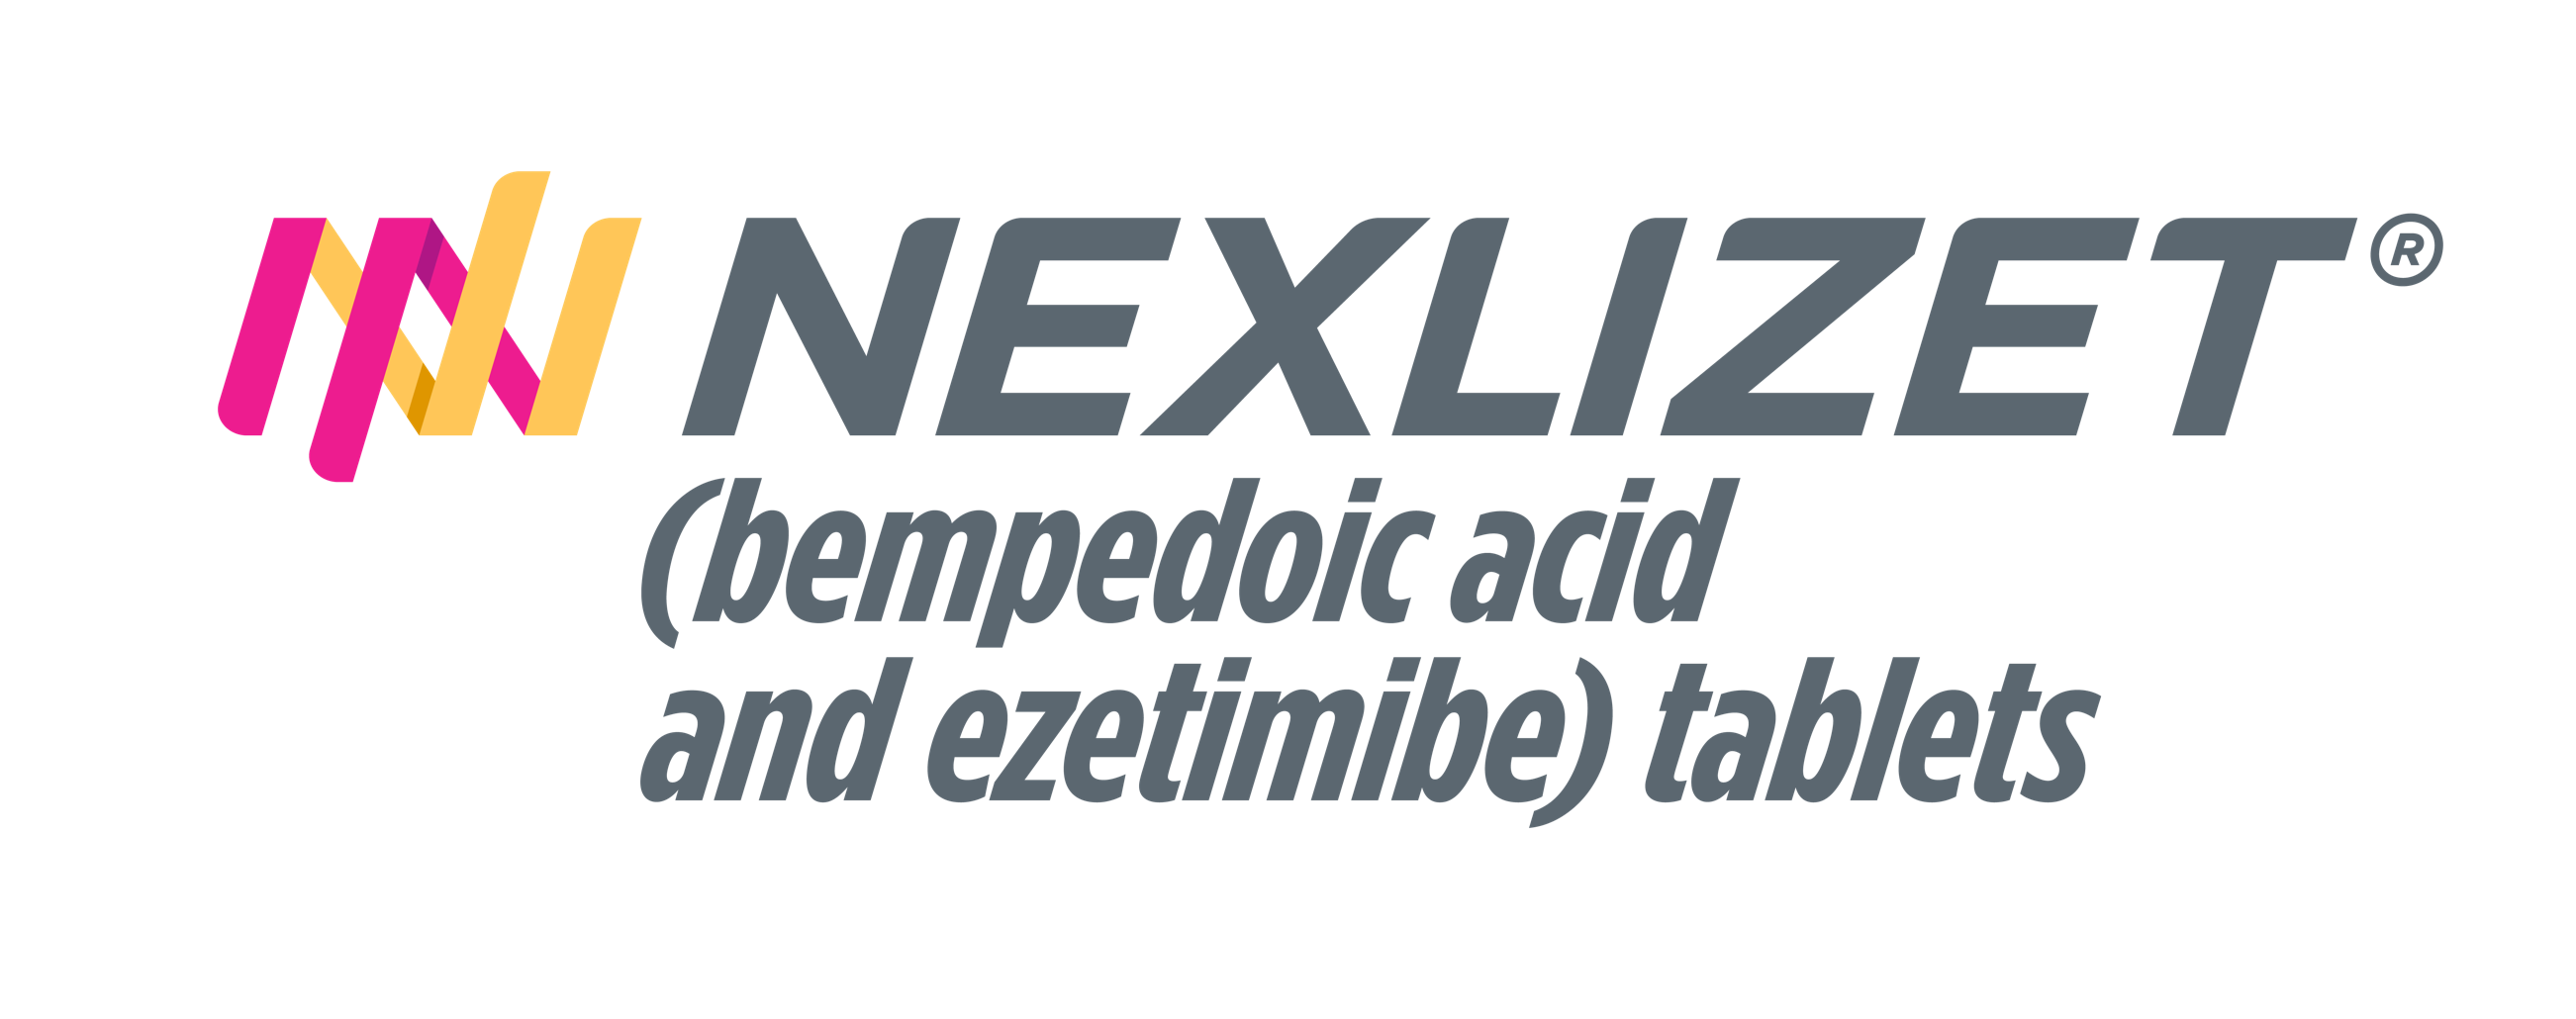 NEXLIZET® (bempedoic acid and ezetimibe) tablets